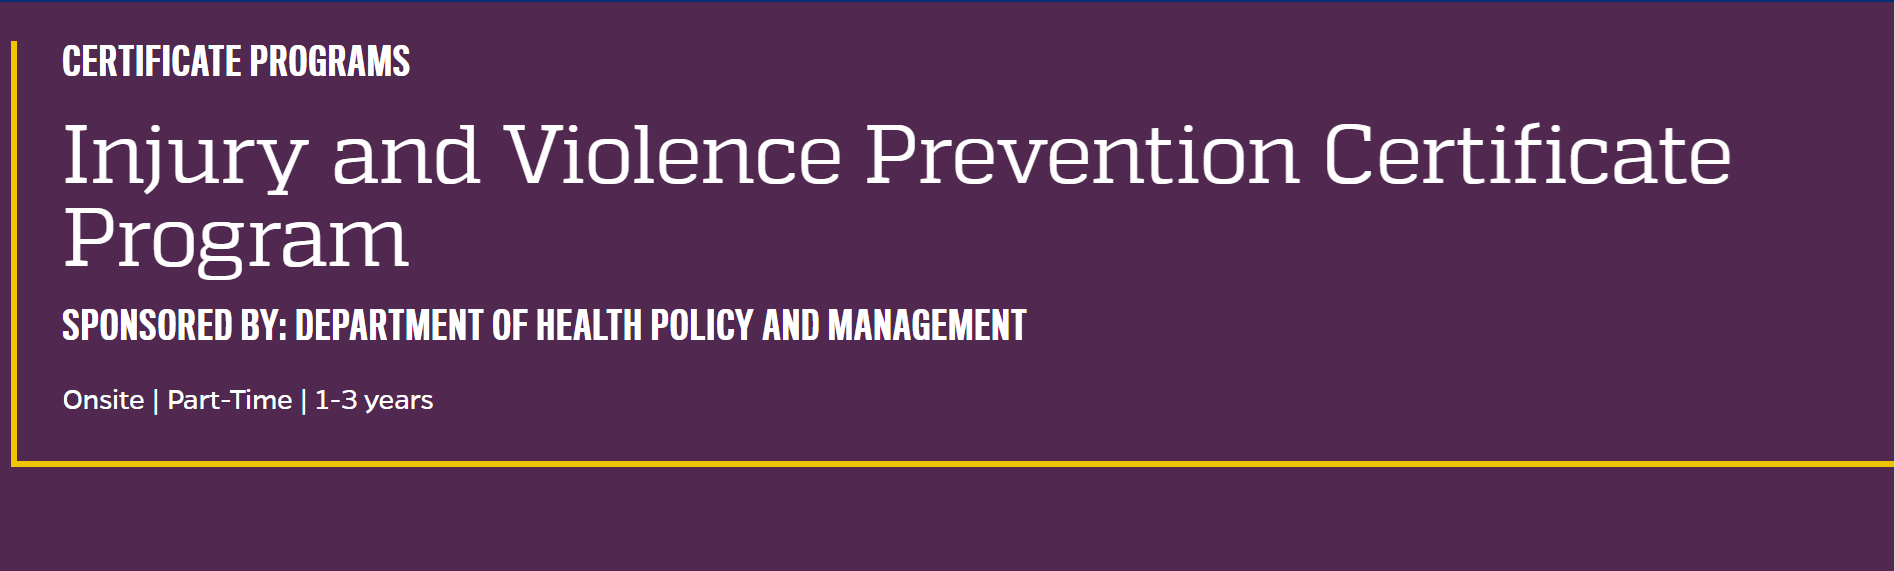 John Hopkins CIRP Injury and Violence Prevention Certificate Program